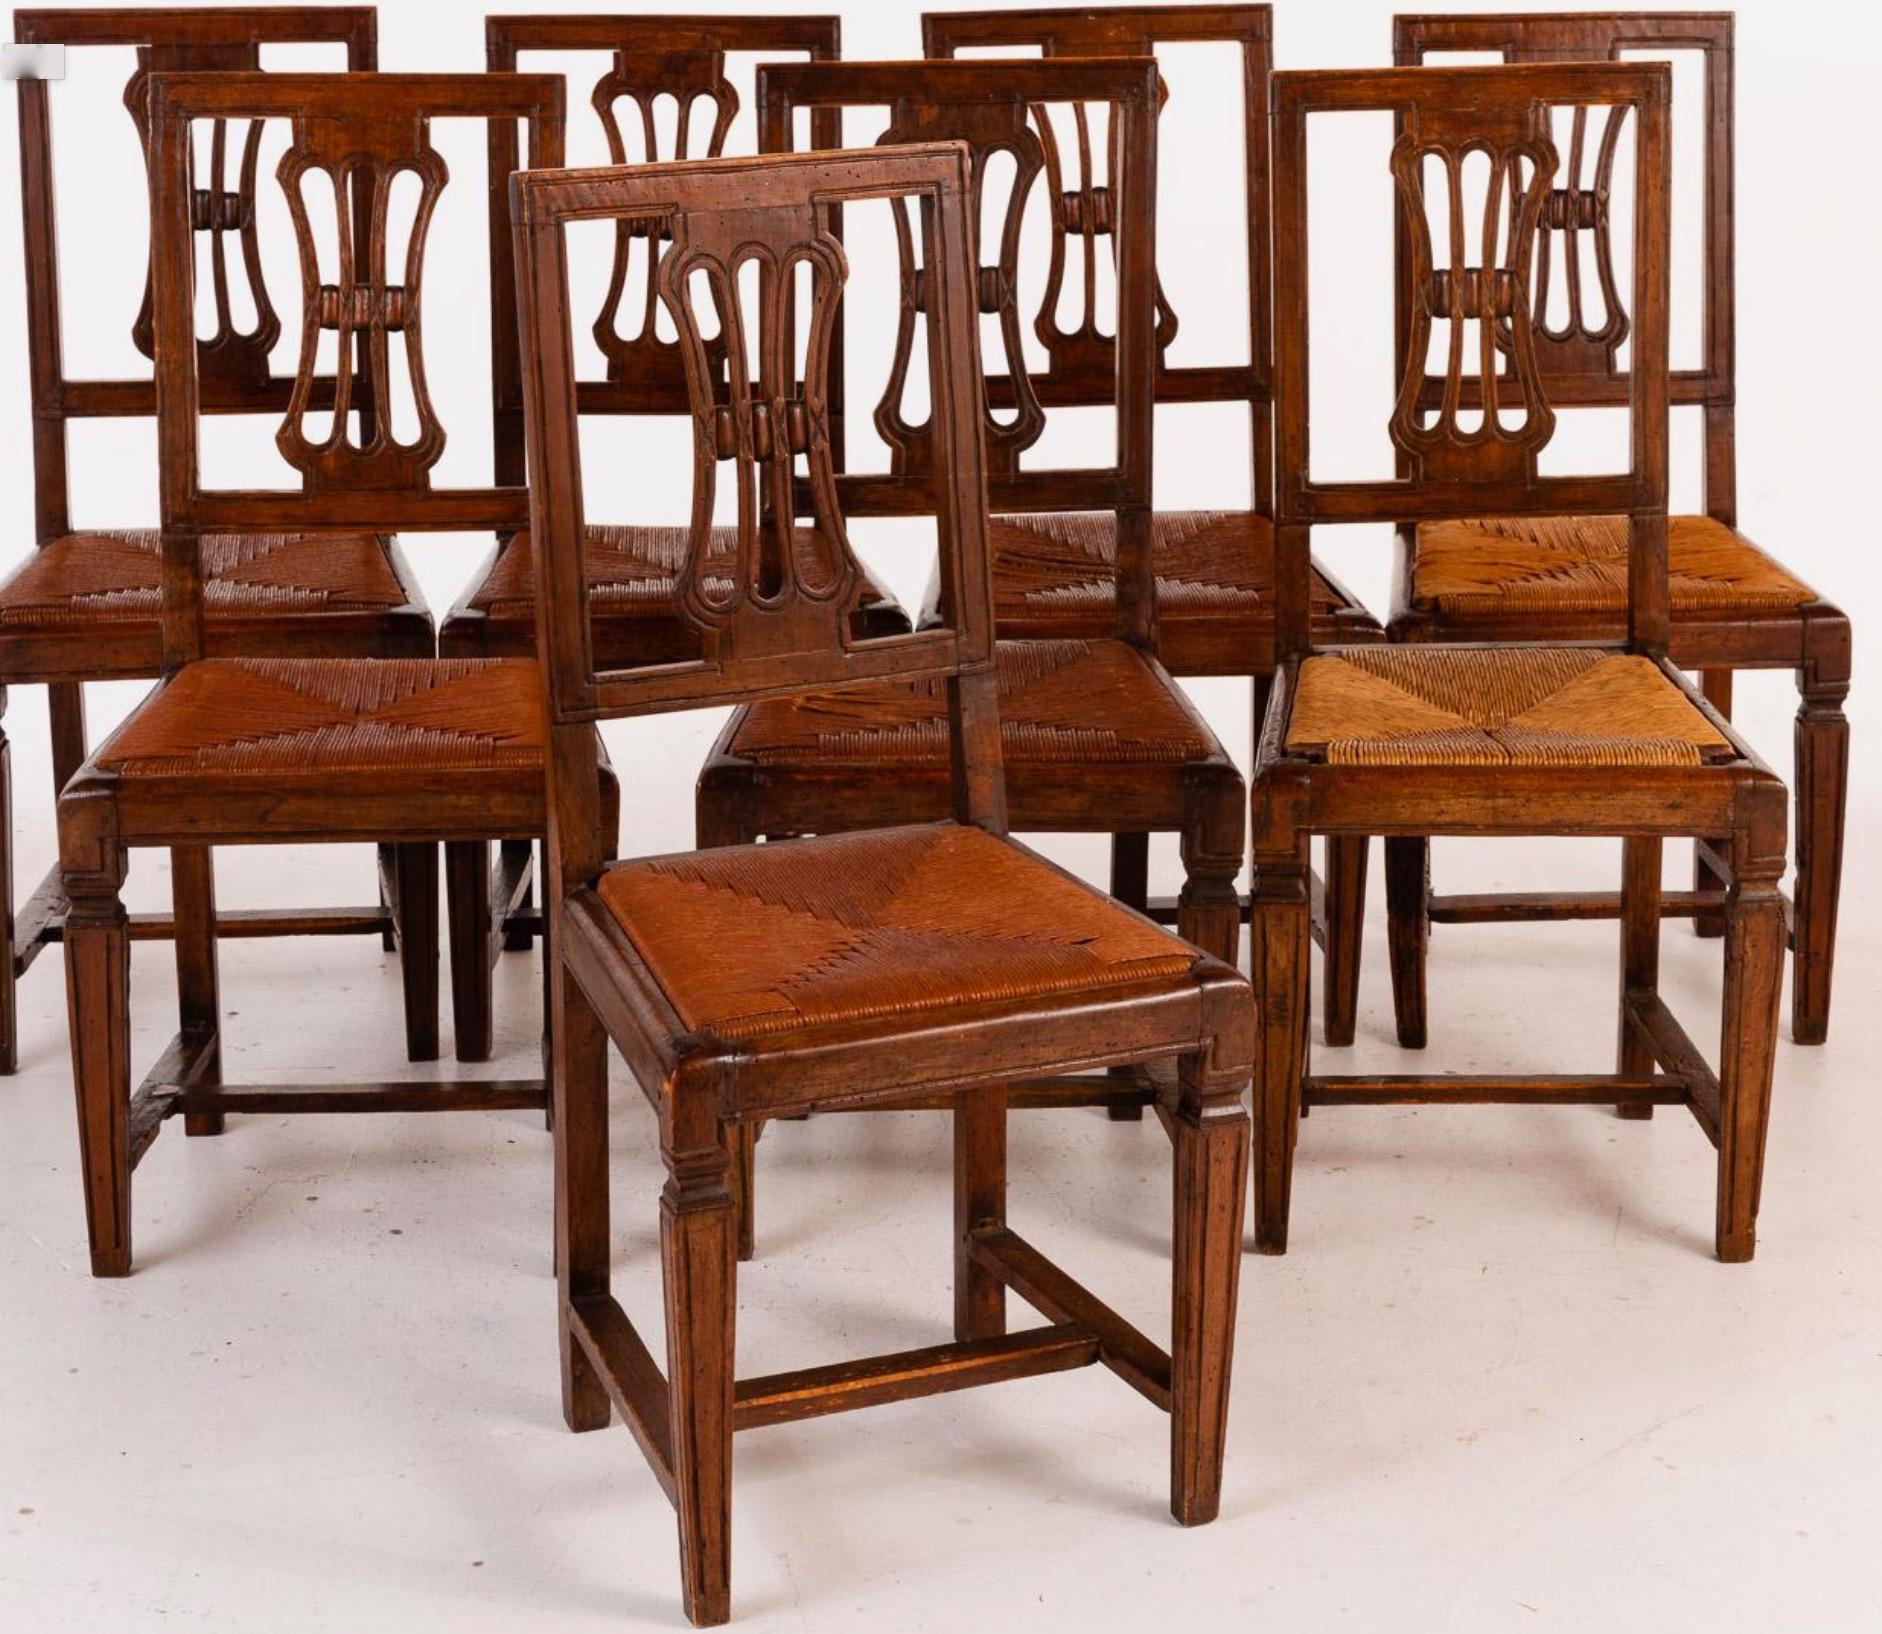 Set of 8 18th century Italian side chairs, walnut, with rush seats.
 